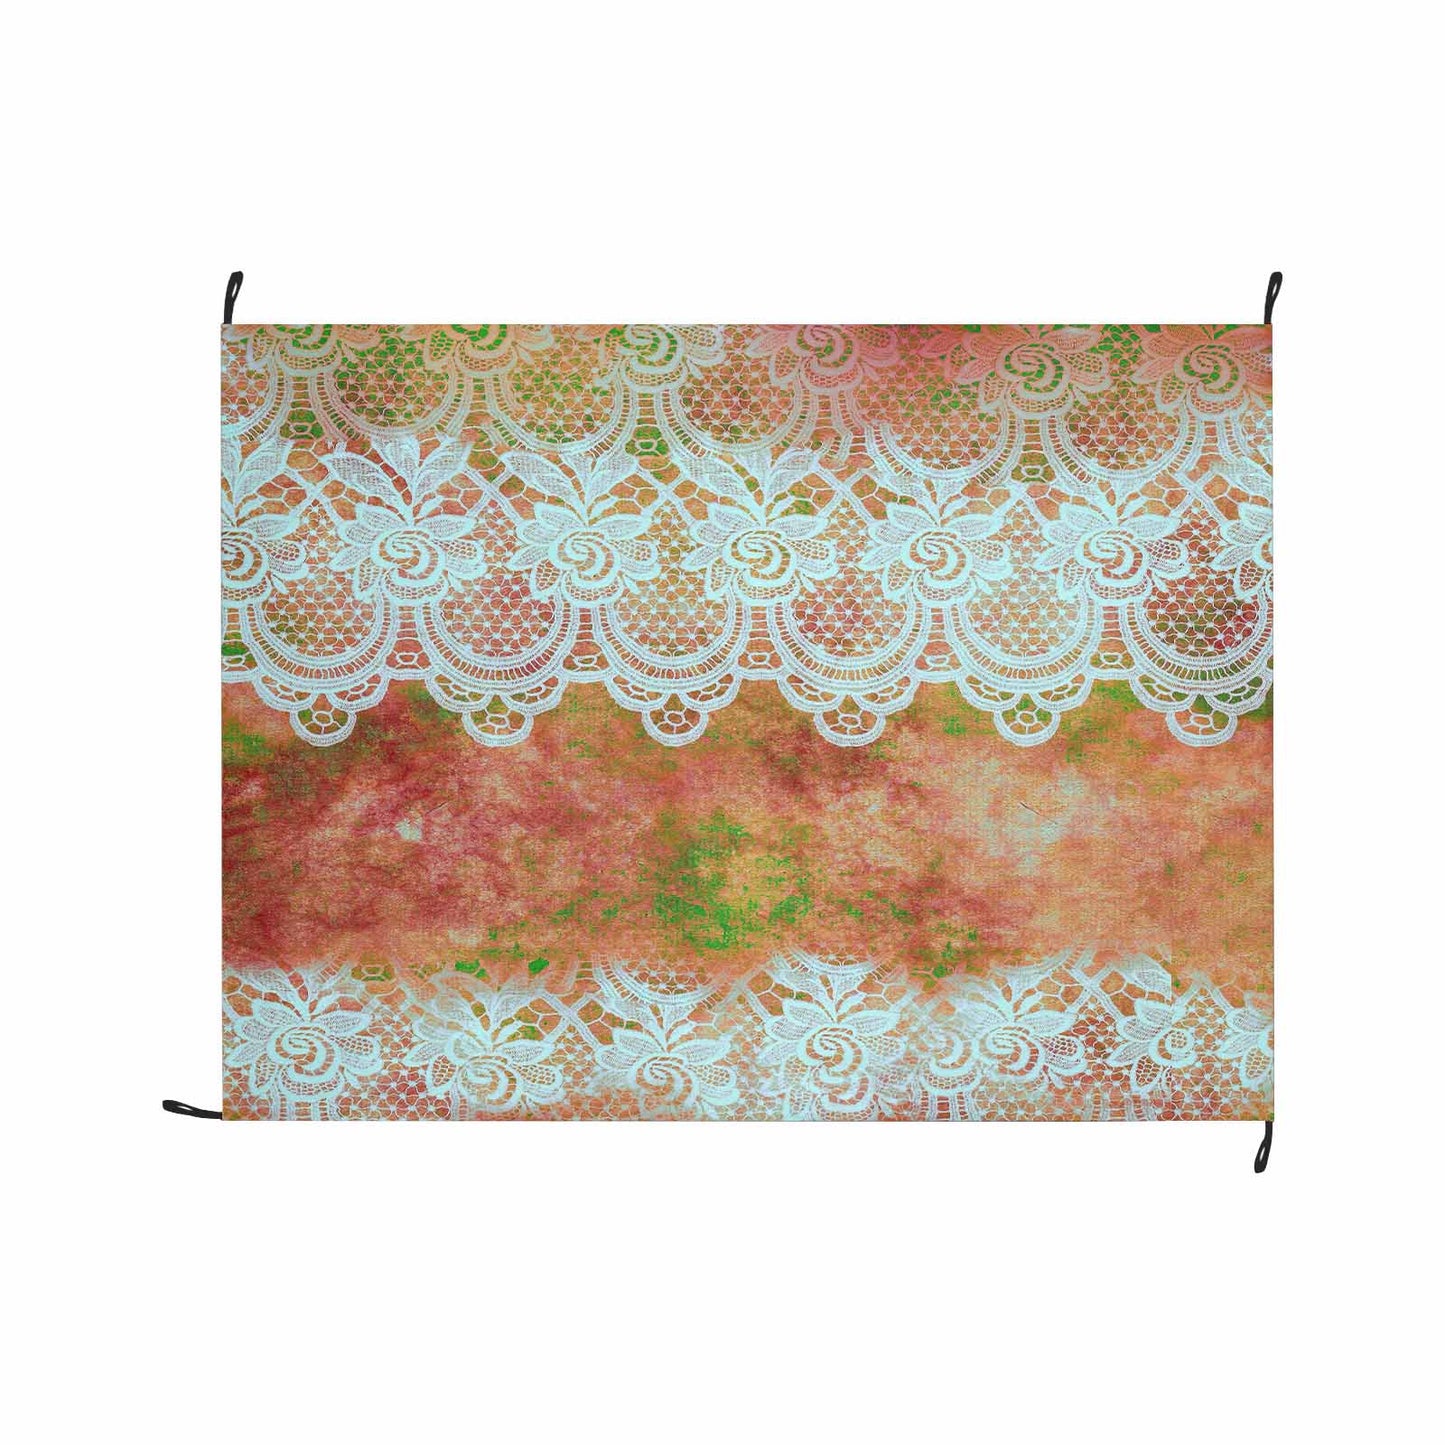 Victorian lace print waterproof picnic mat, 69 x 55in, design 31